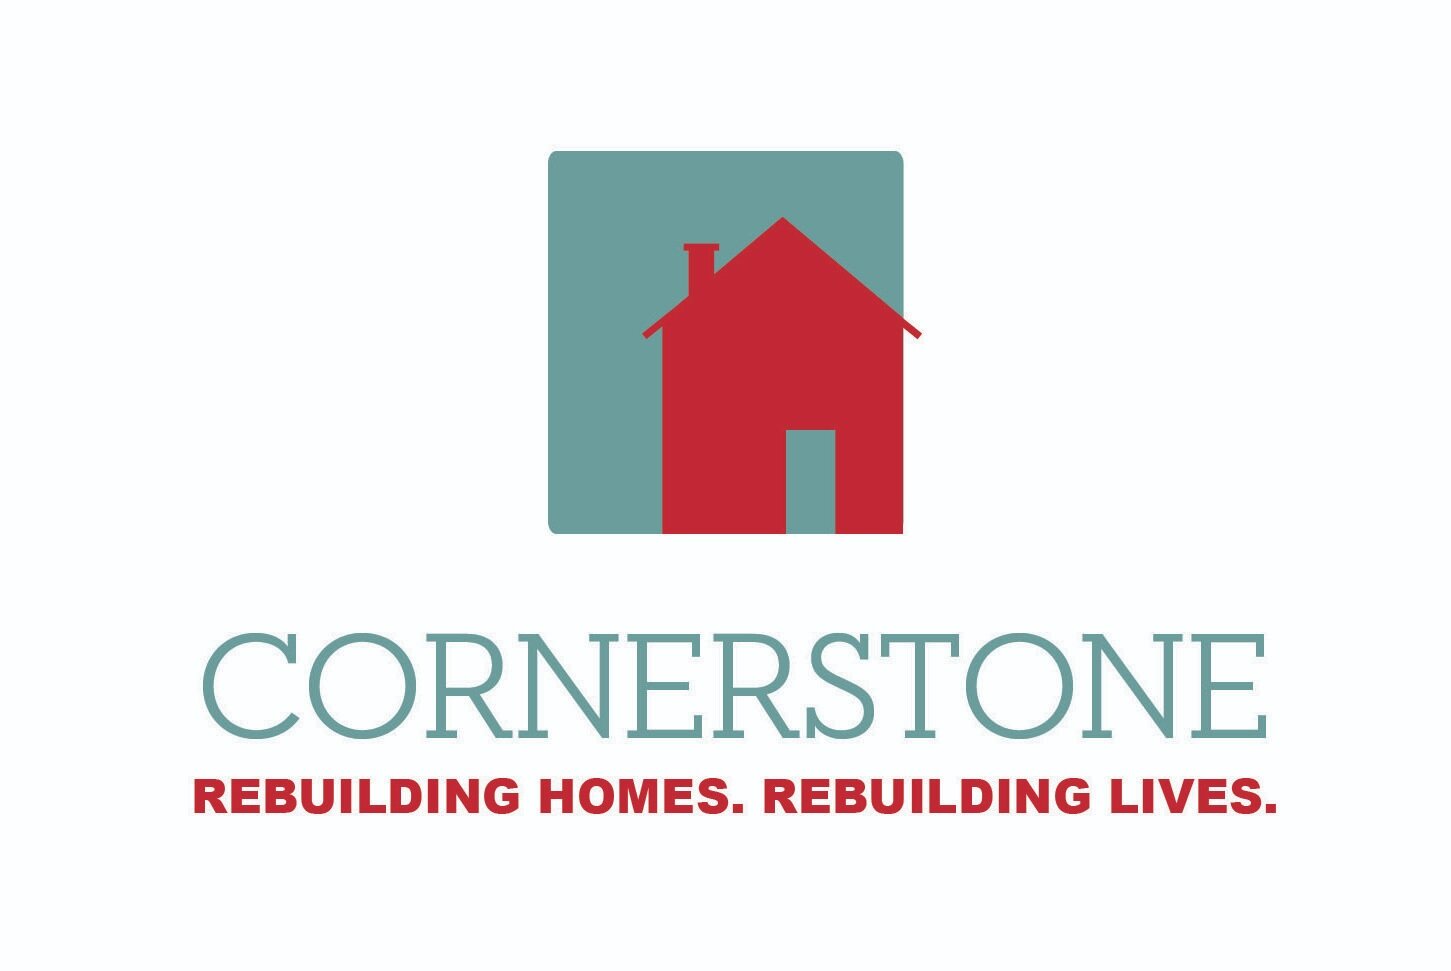 Cornerstone Corporation in St. Louis, MO